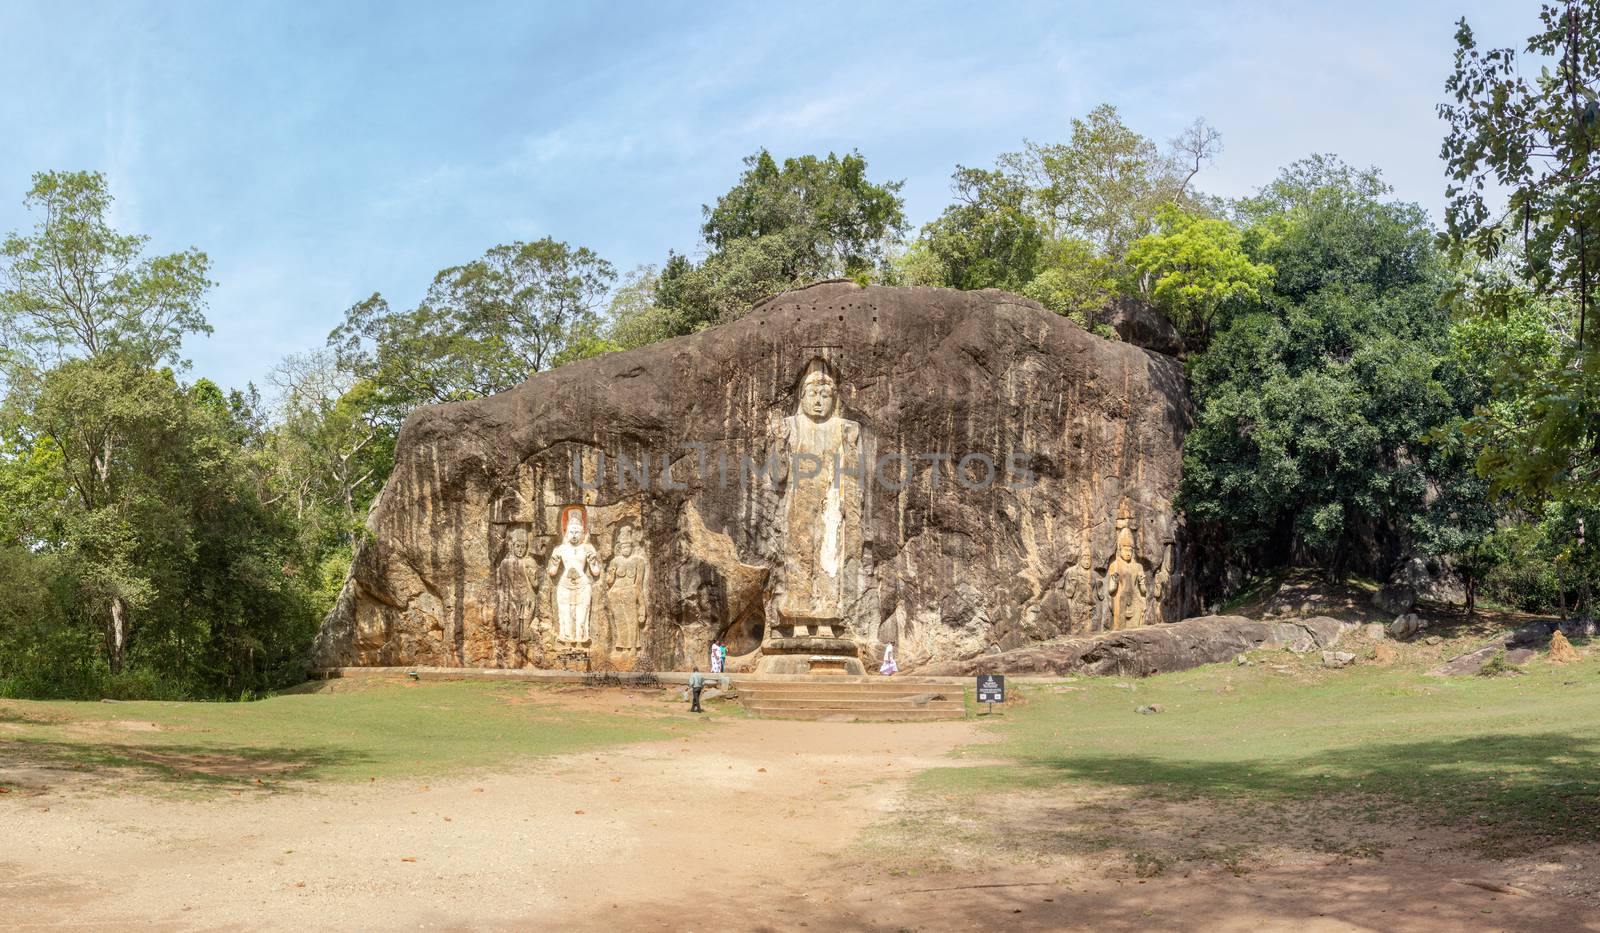 Buduruwagala Rock carvings heritage site, wide-angle photograph. by nilanka